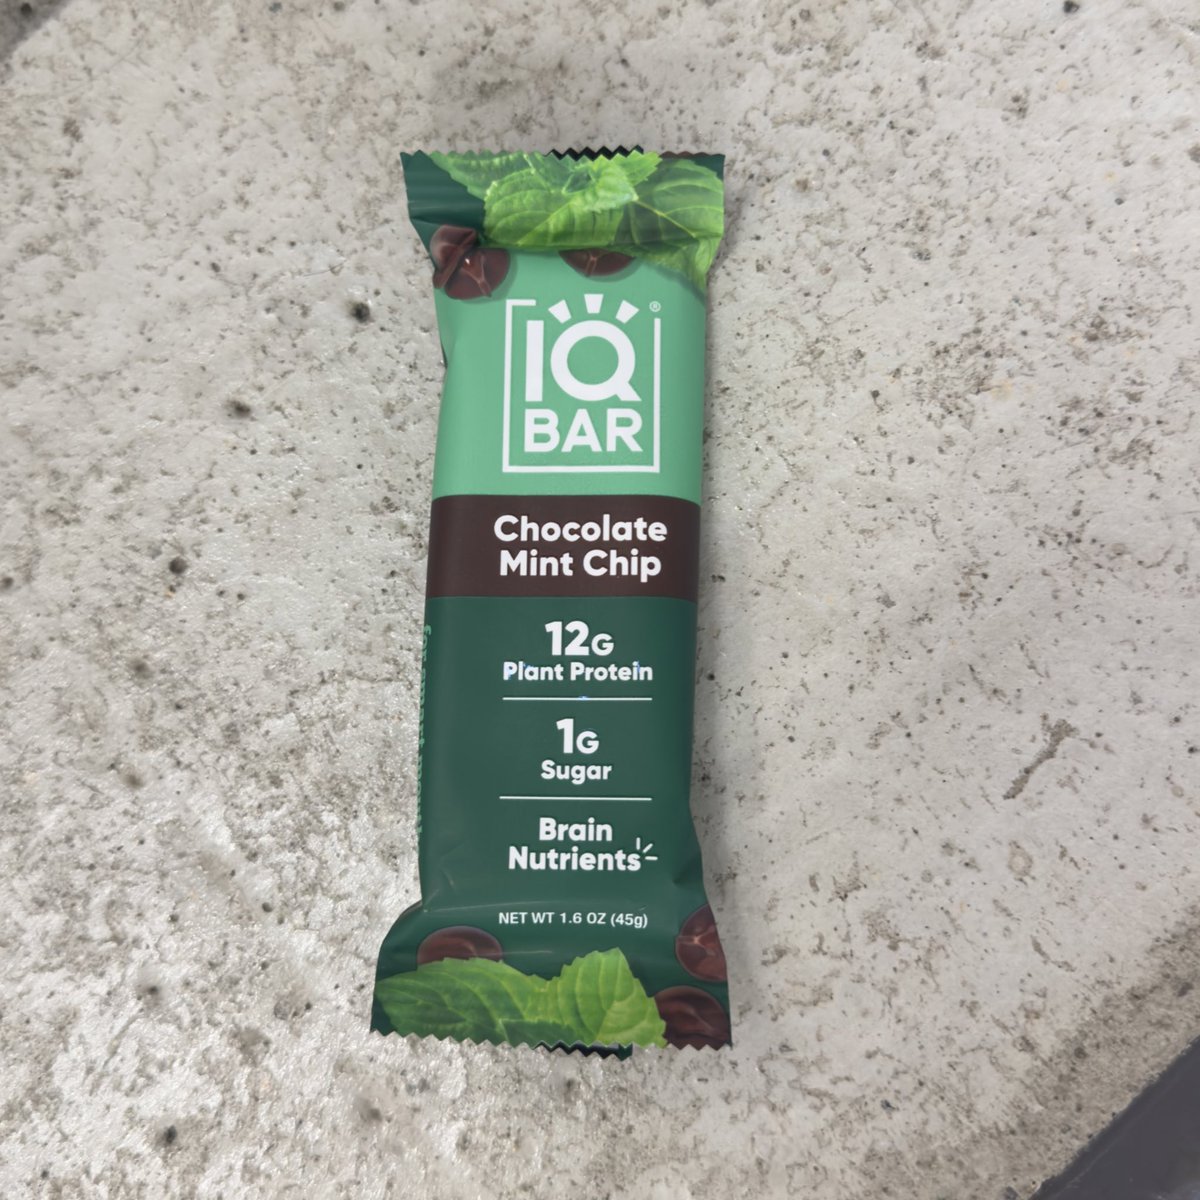 Super tasty…Chocolate Mint Chip @eatiqbar